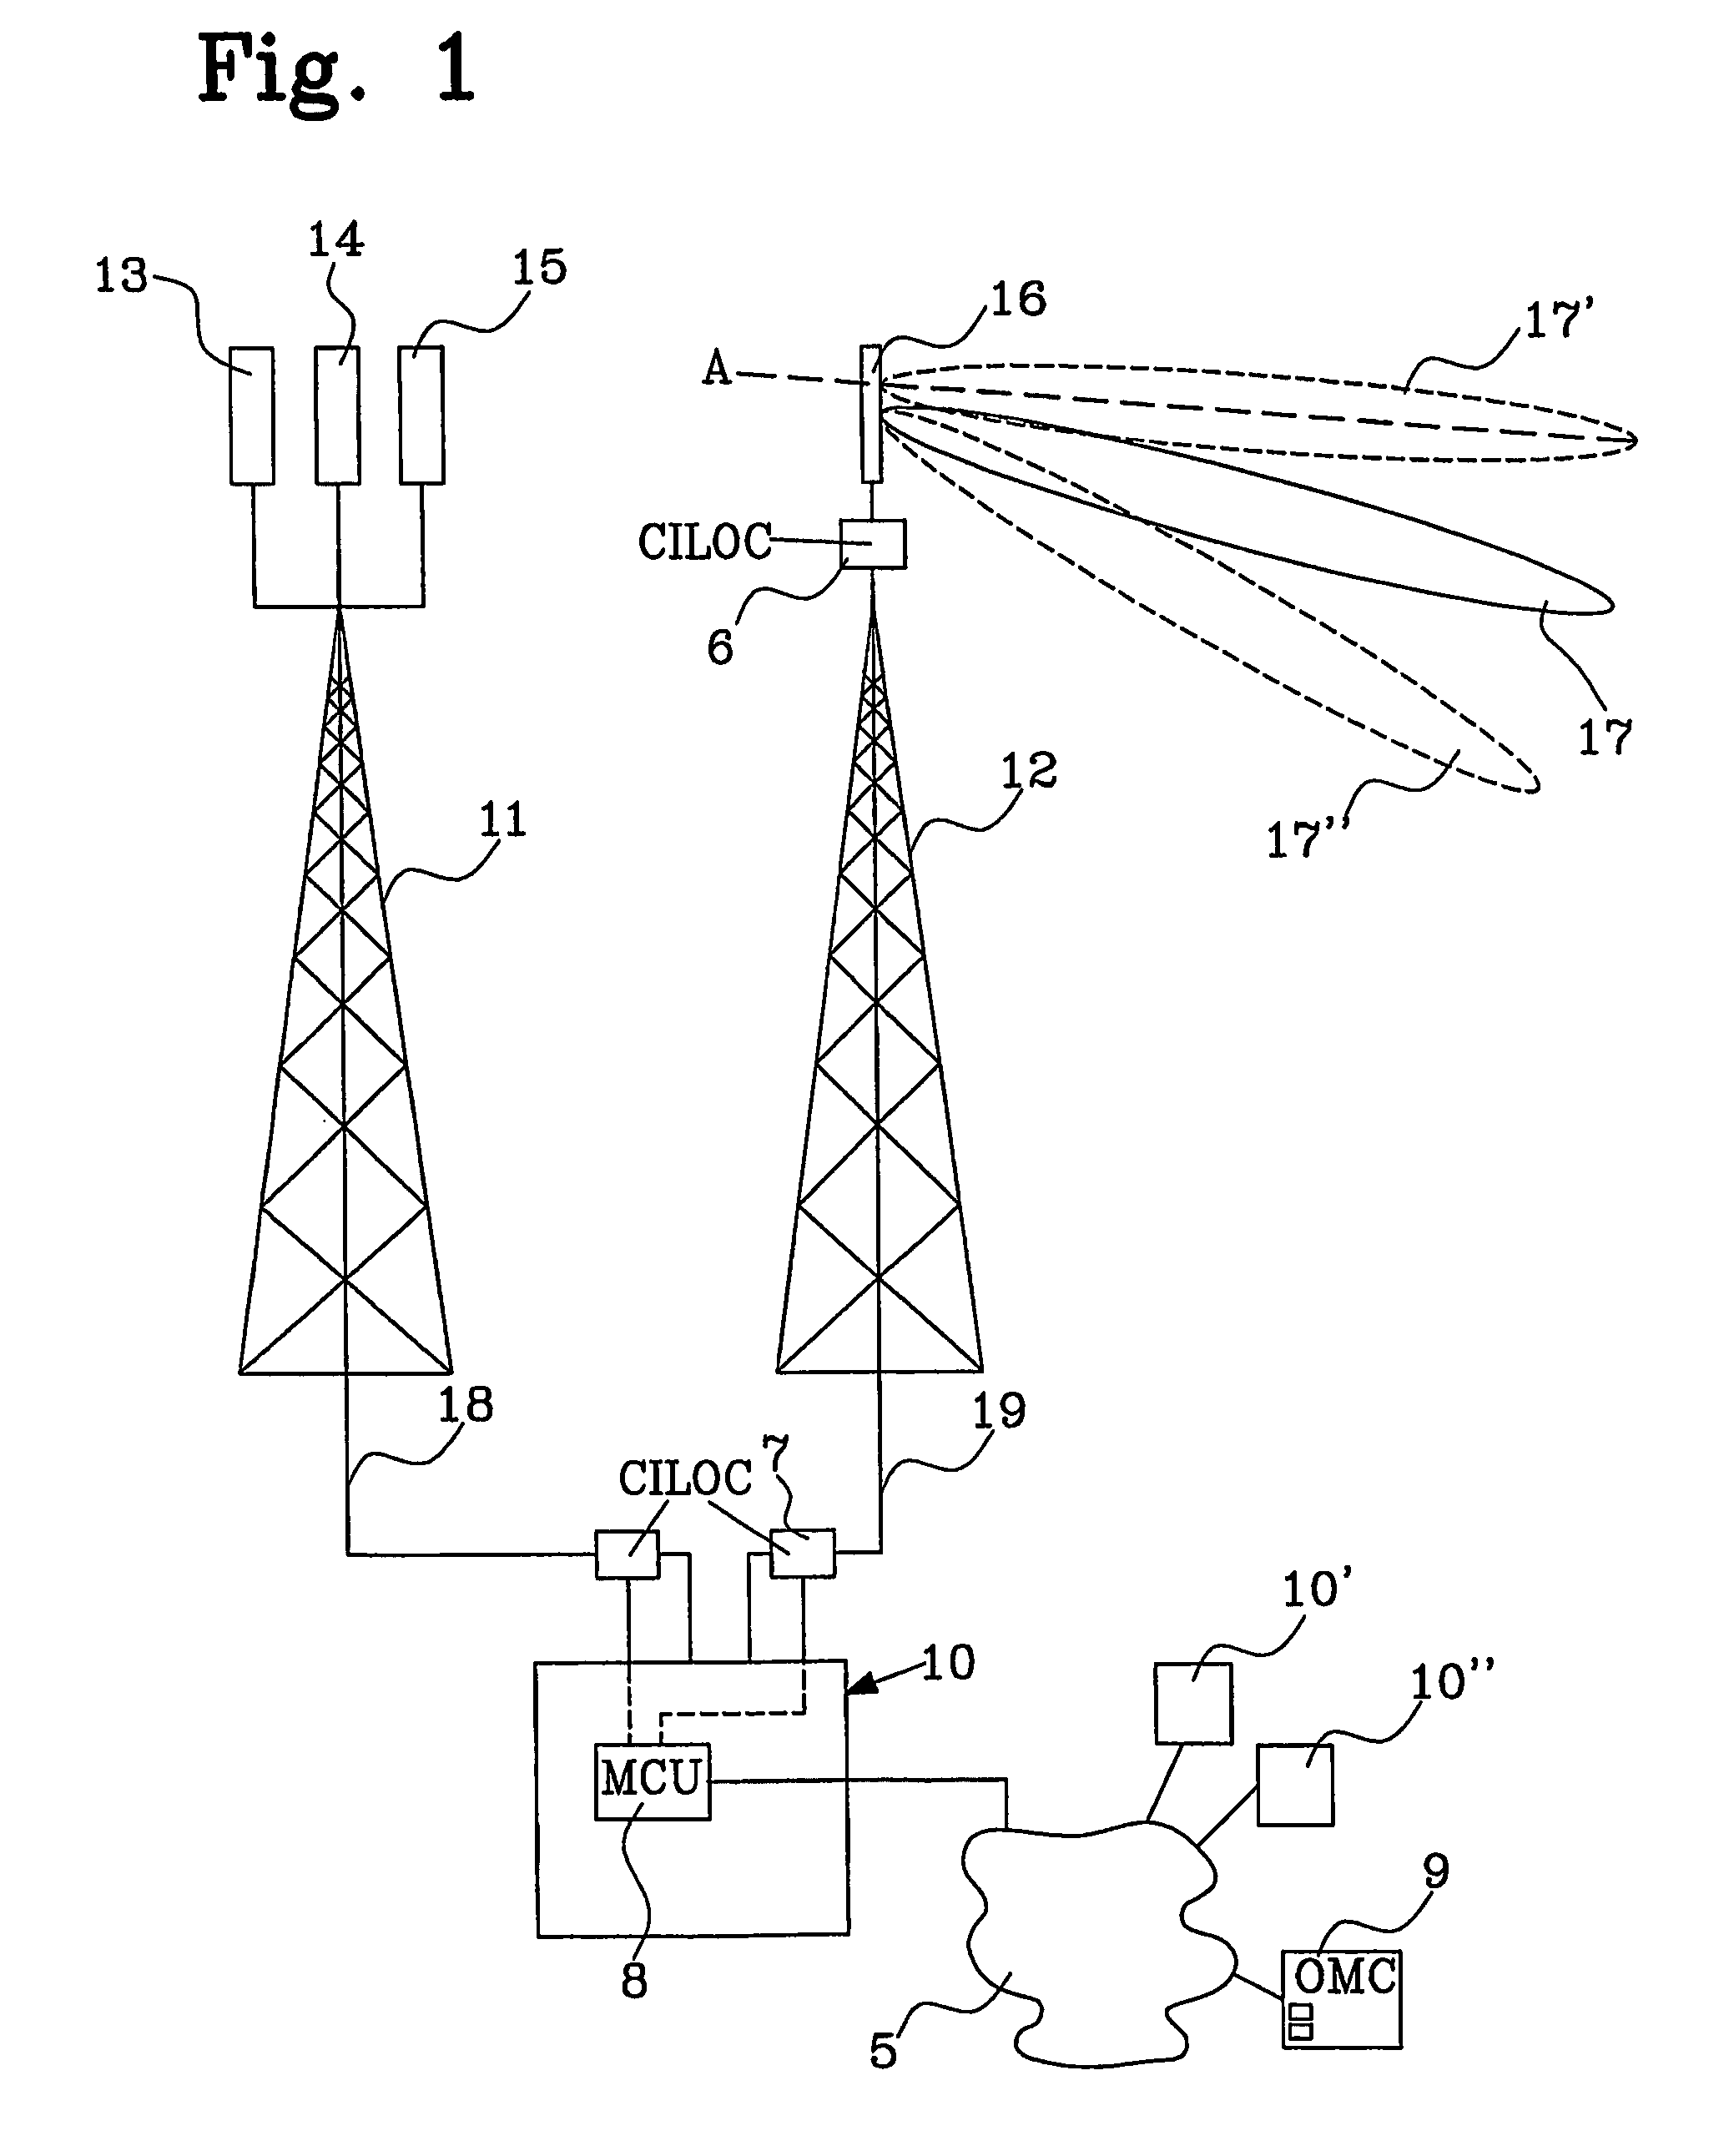 Antenna control system